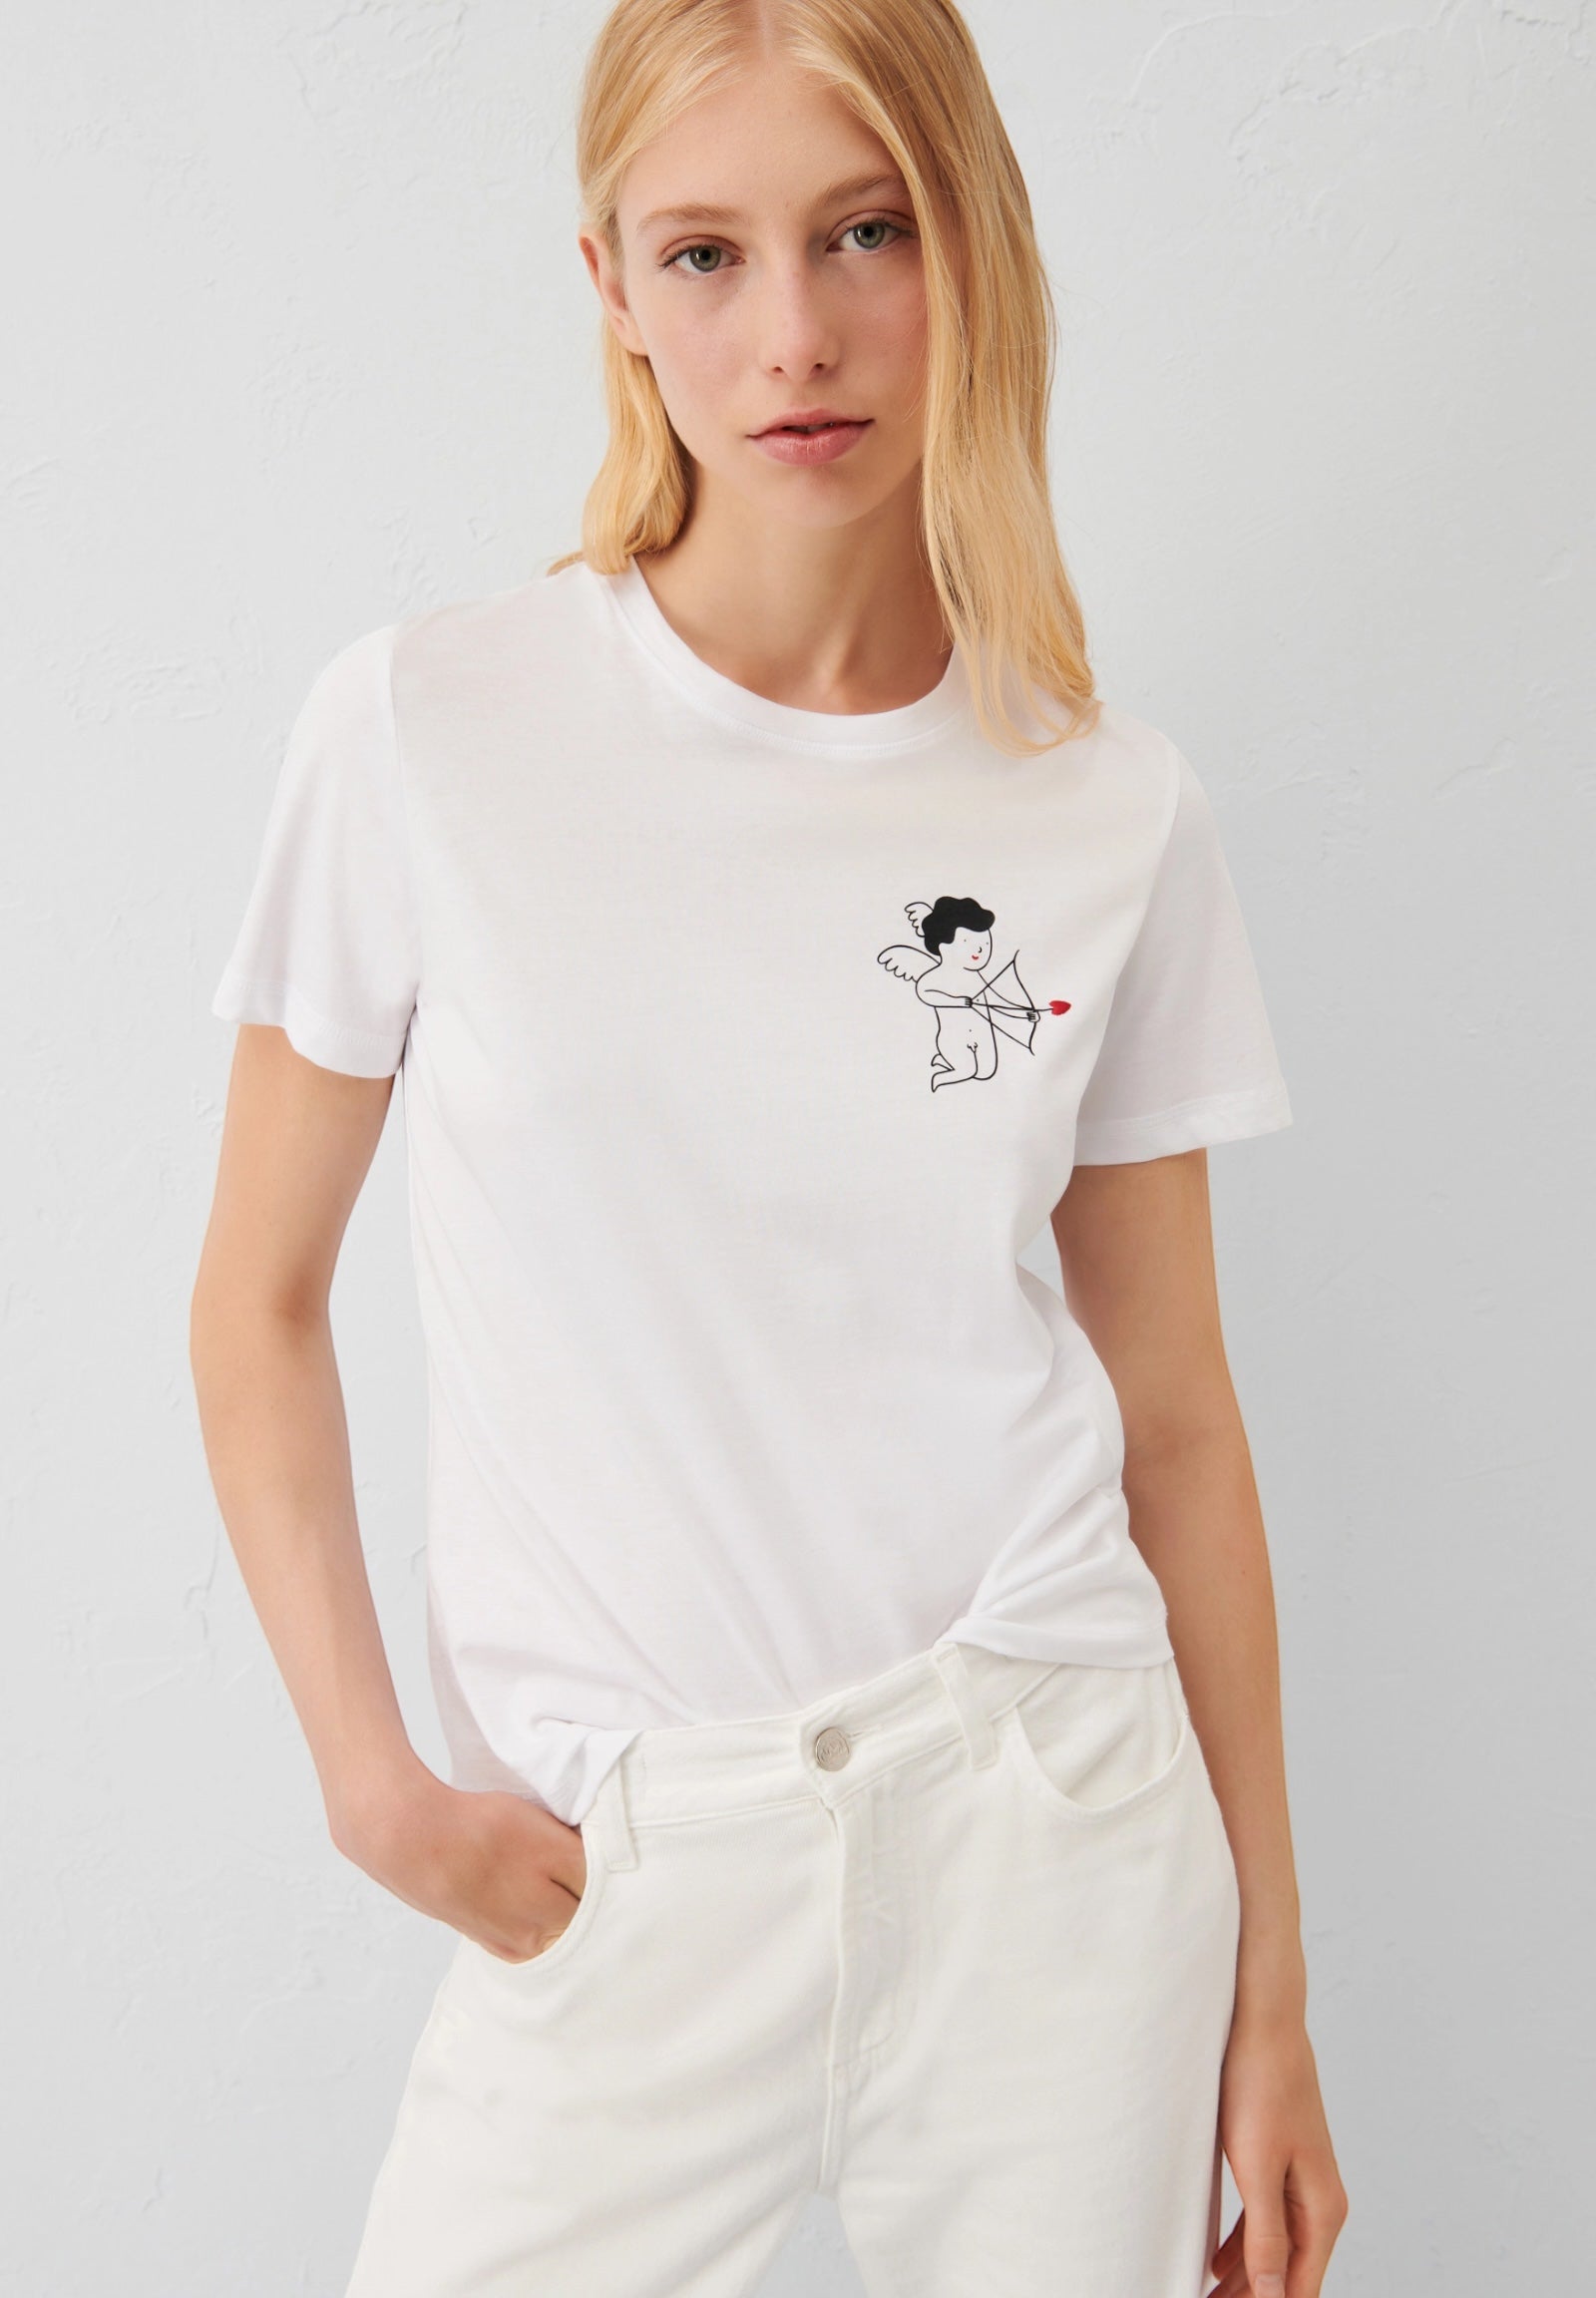 Marella T-Shirt* Branca Bianco Ottico